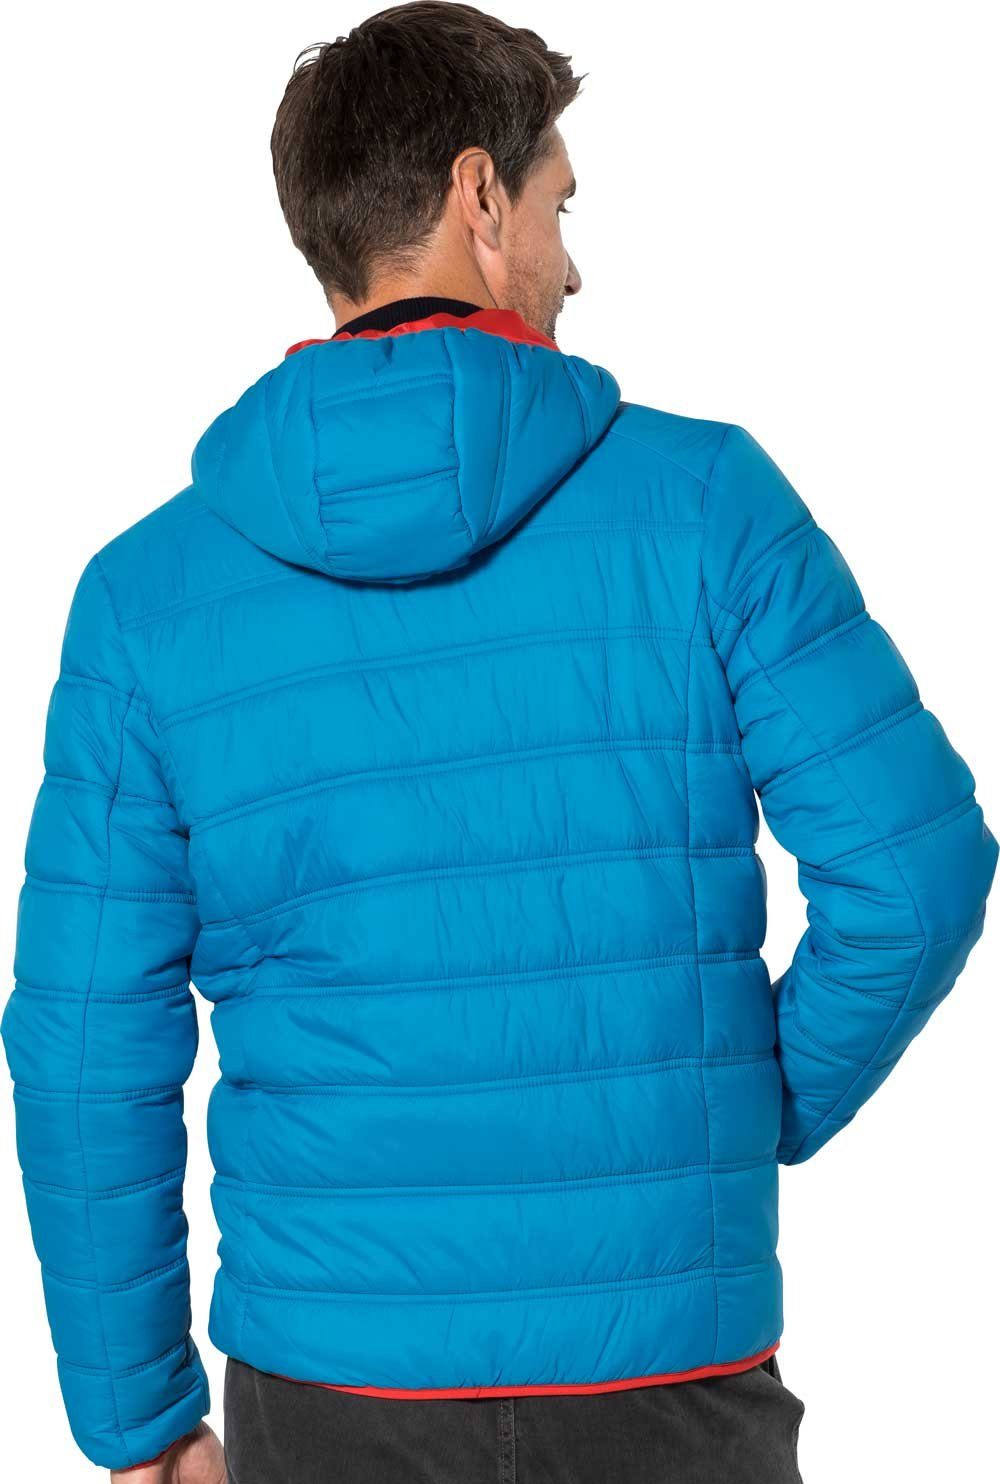 Kapuze blau mit ultraleichte Jacke Nordcap Steppjacke